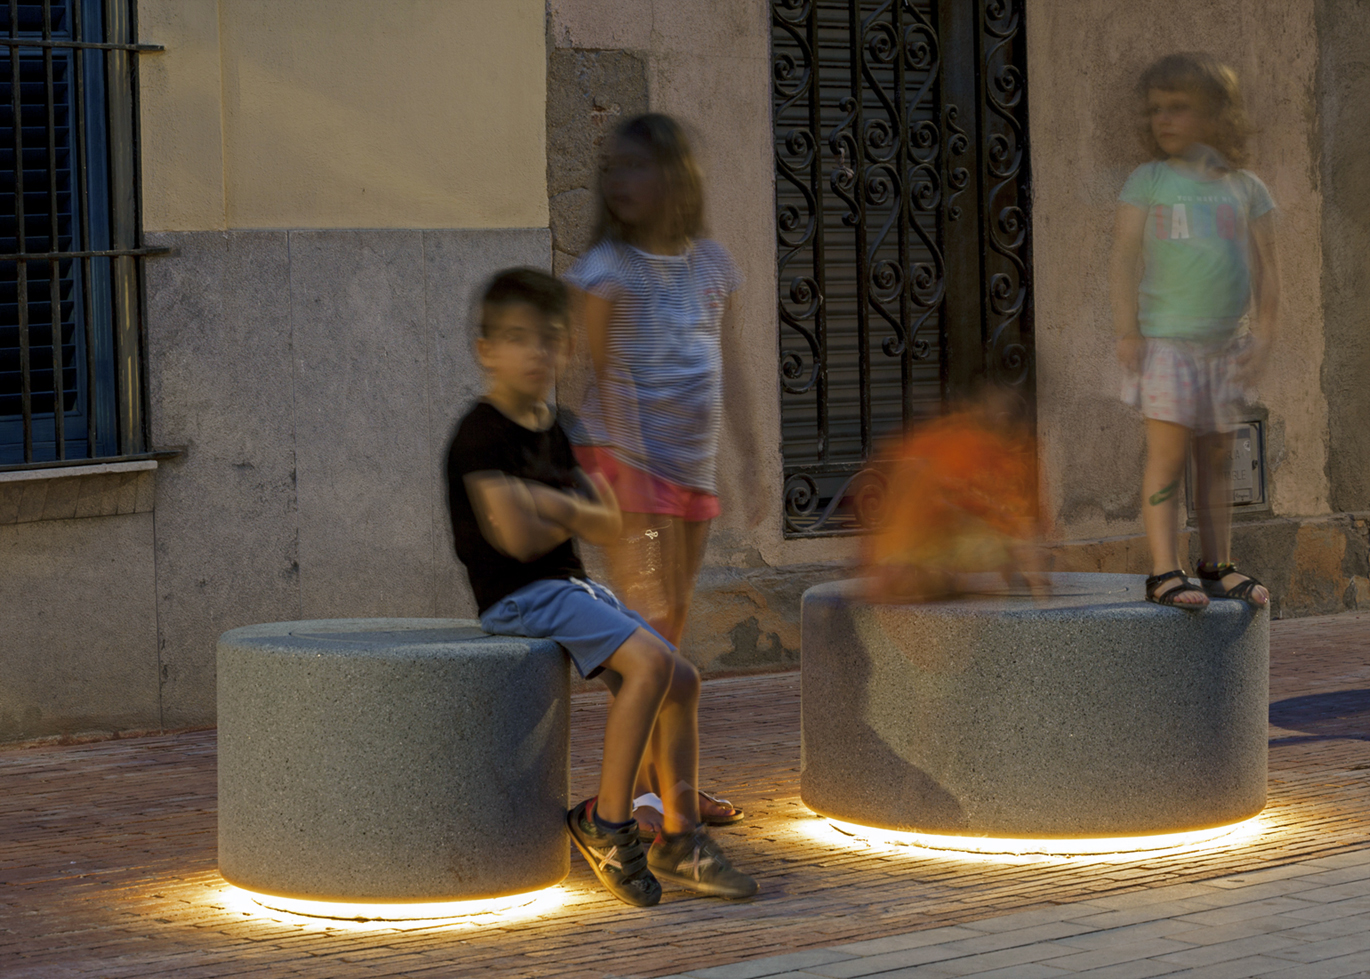 Illuminated Soc backless benches by SCOB Arquitectes at El Masnou, Barcelona